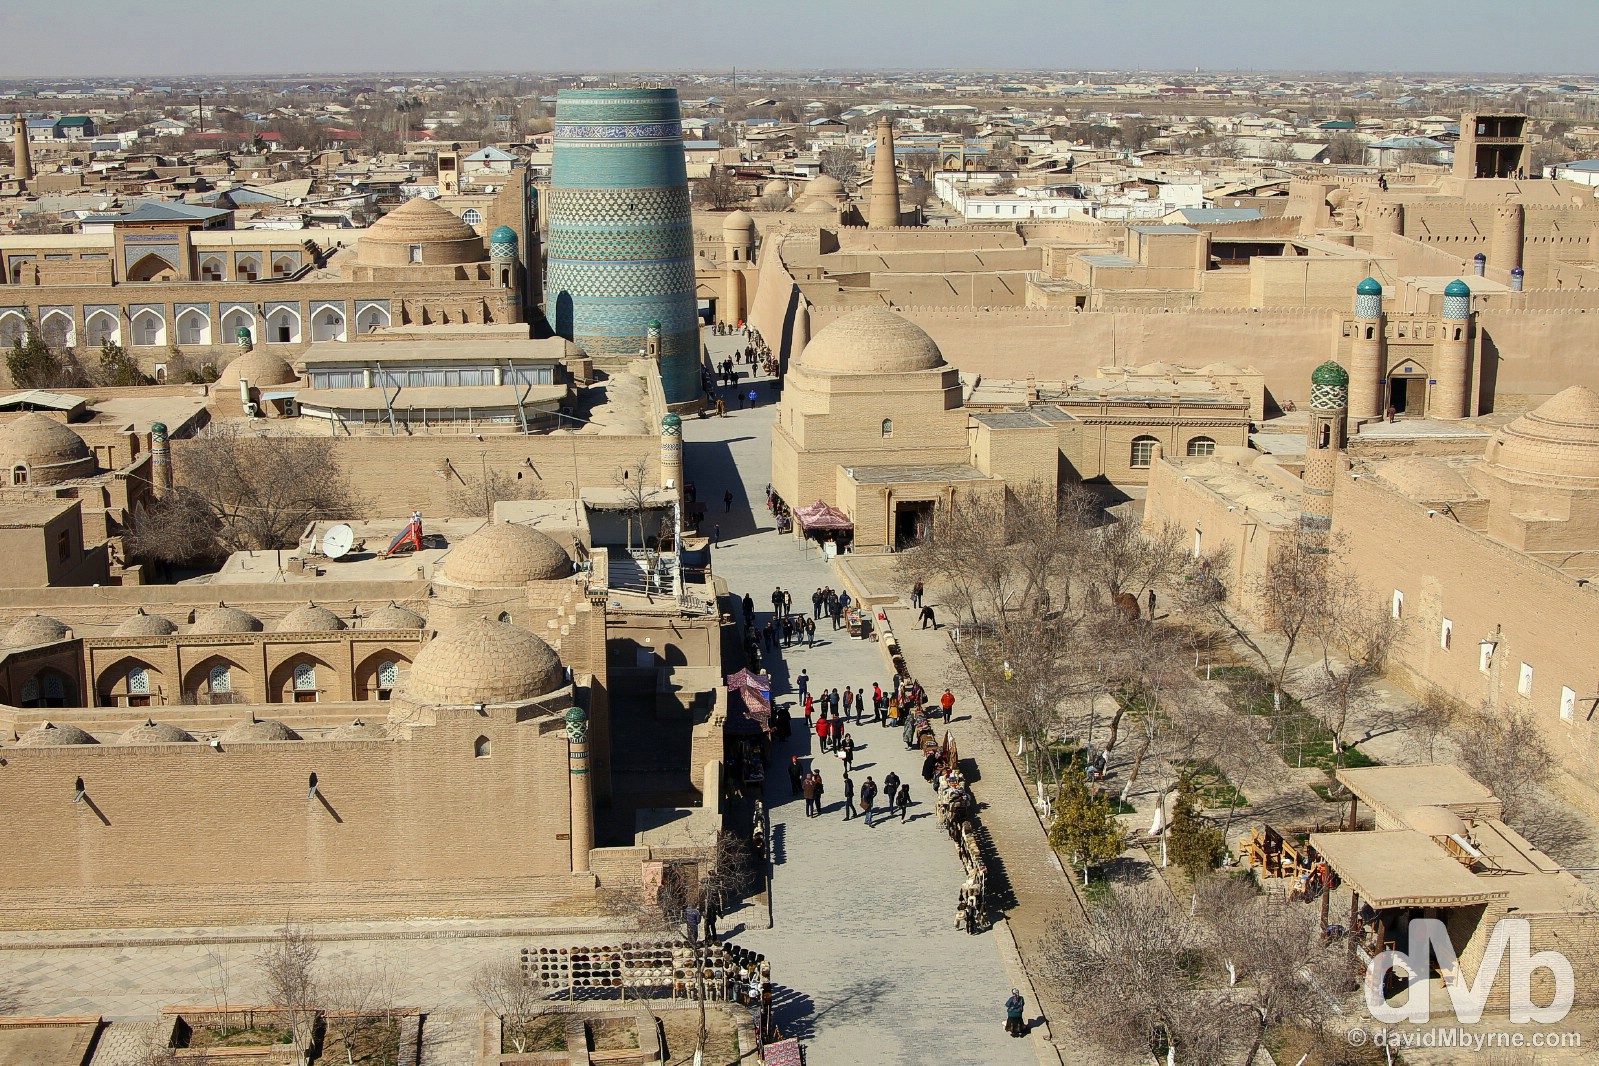 The view of Khiva, Uzbekistan, as seen from the city's 47-metre high Juma Minaret. March 15, 2015.